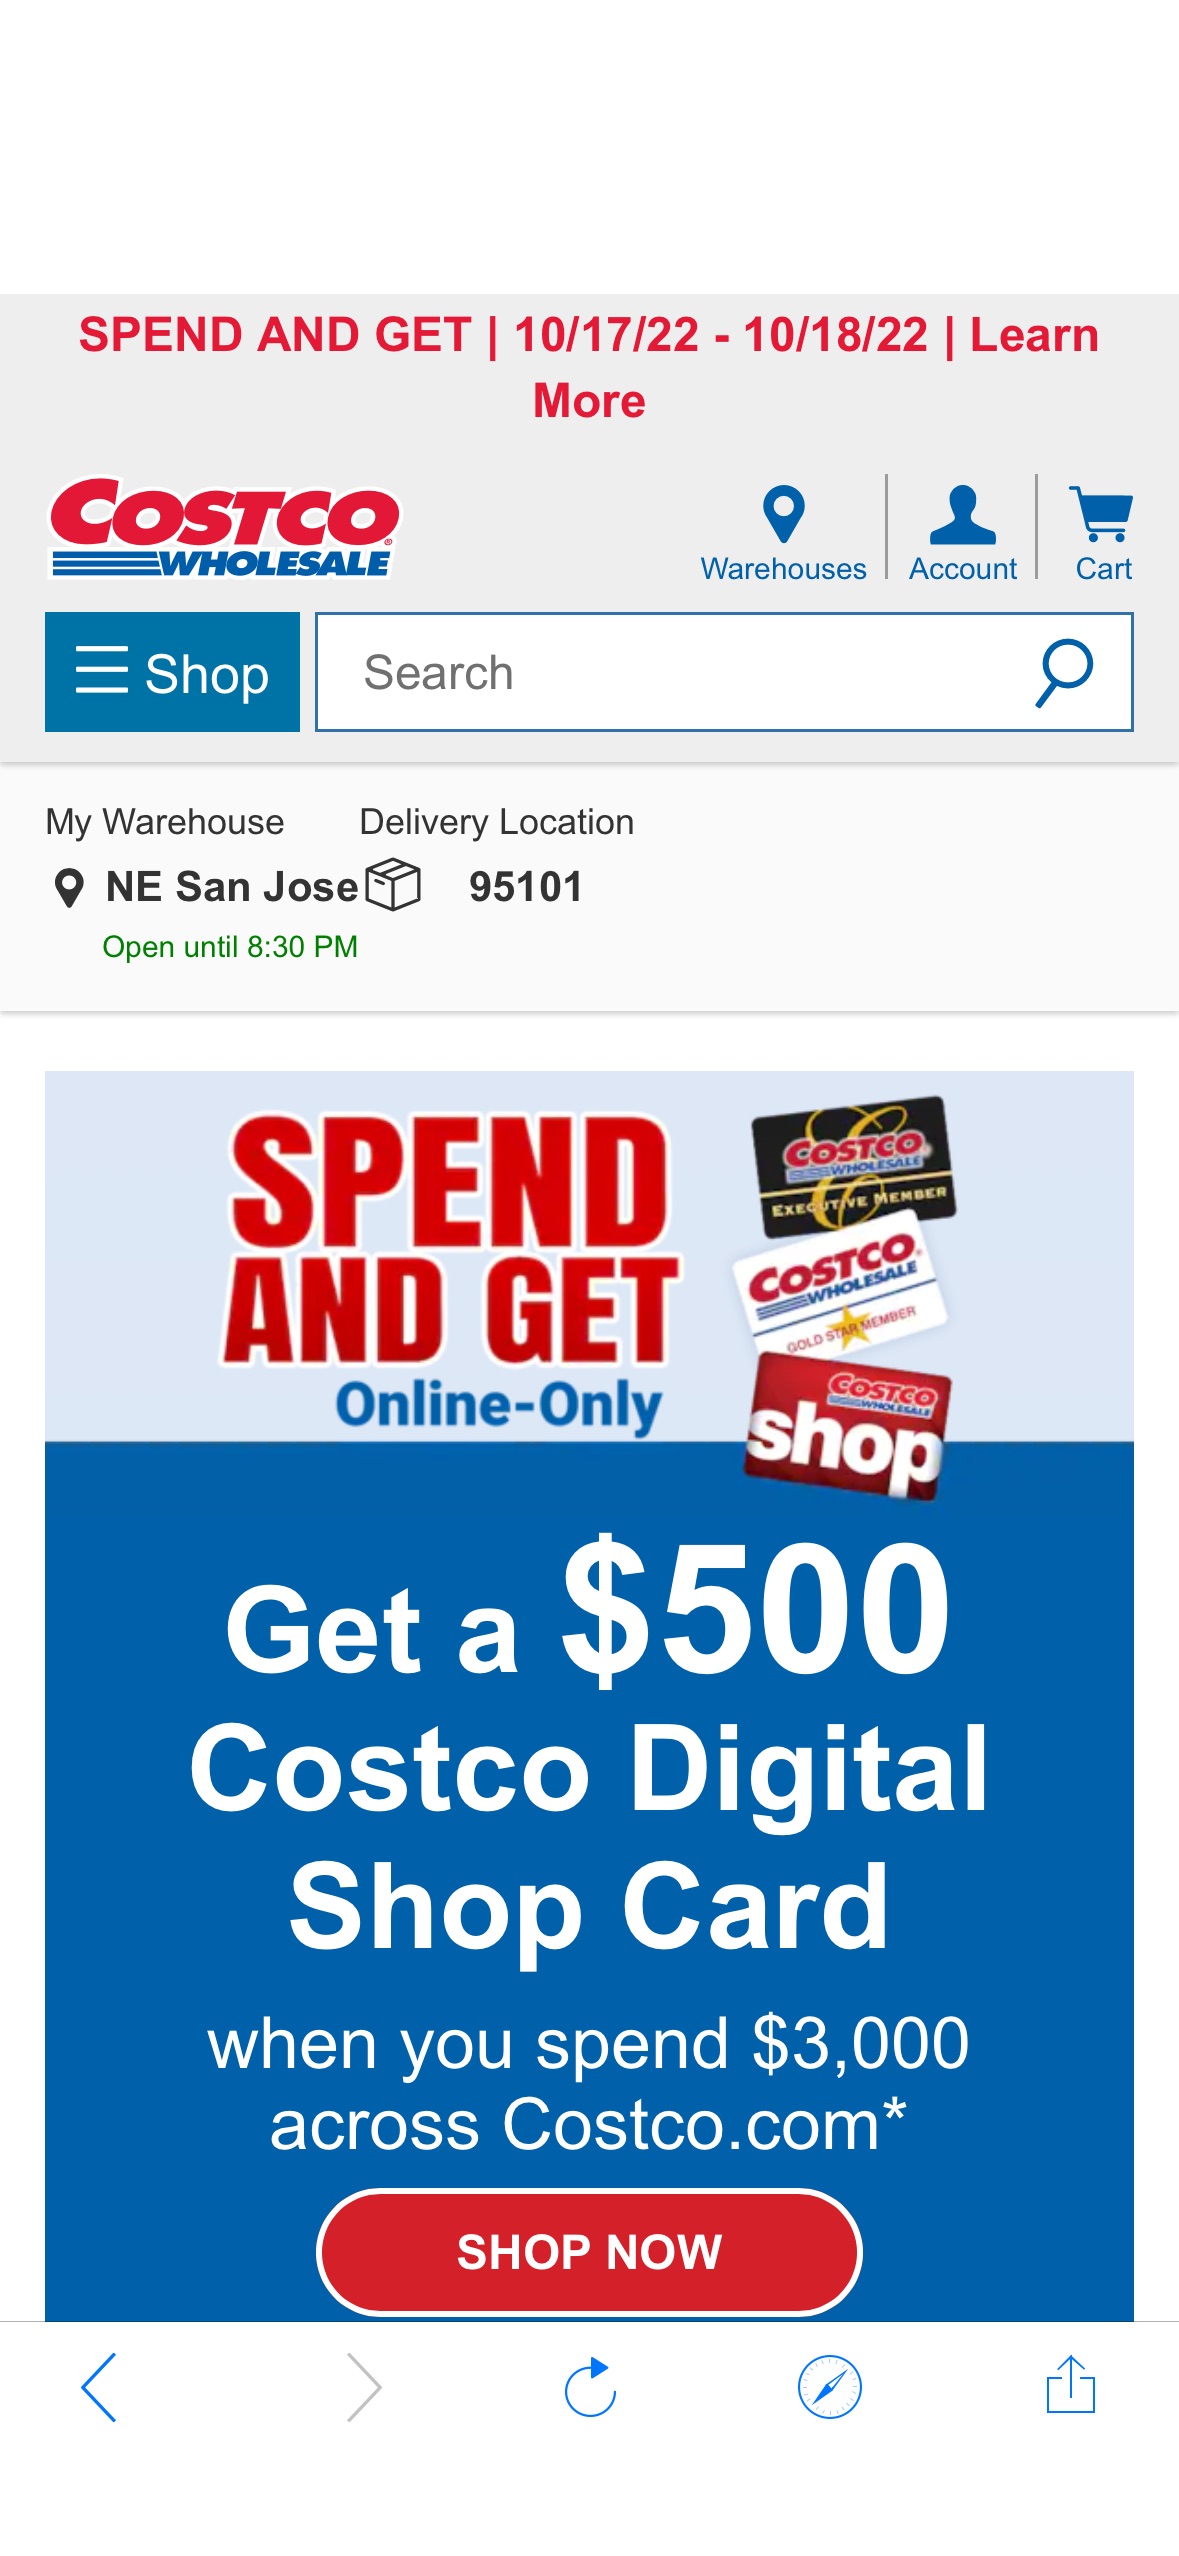 Get a $500 Costco Digital Shop Card
when you spend $3,000 across Costco.com